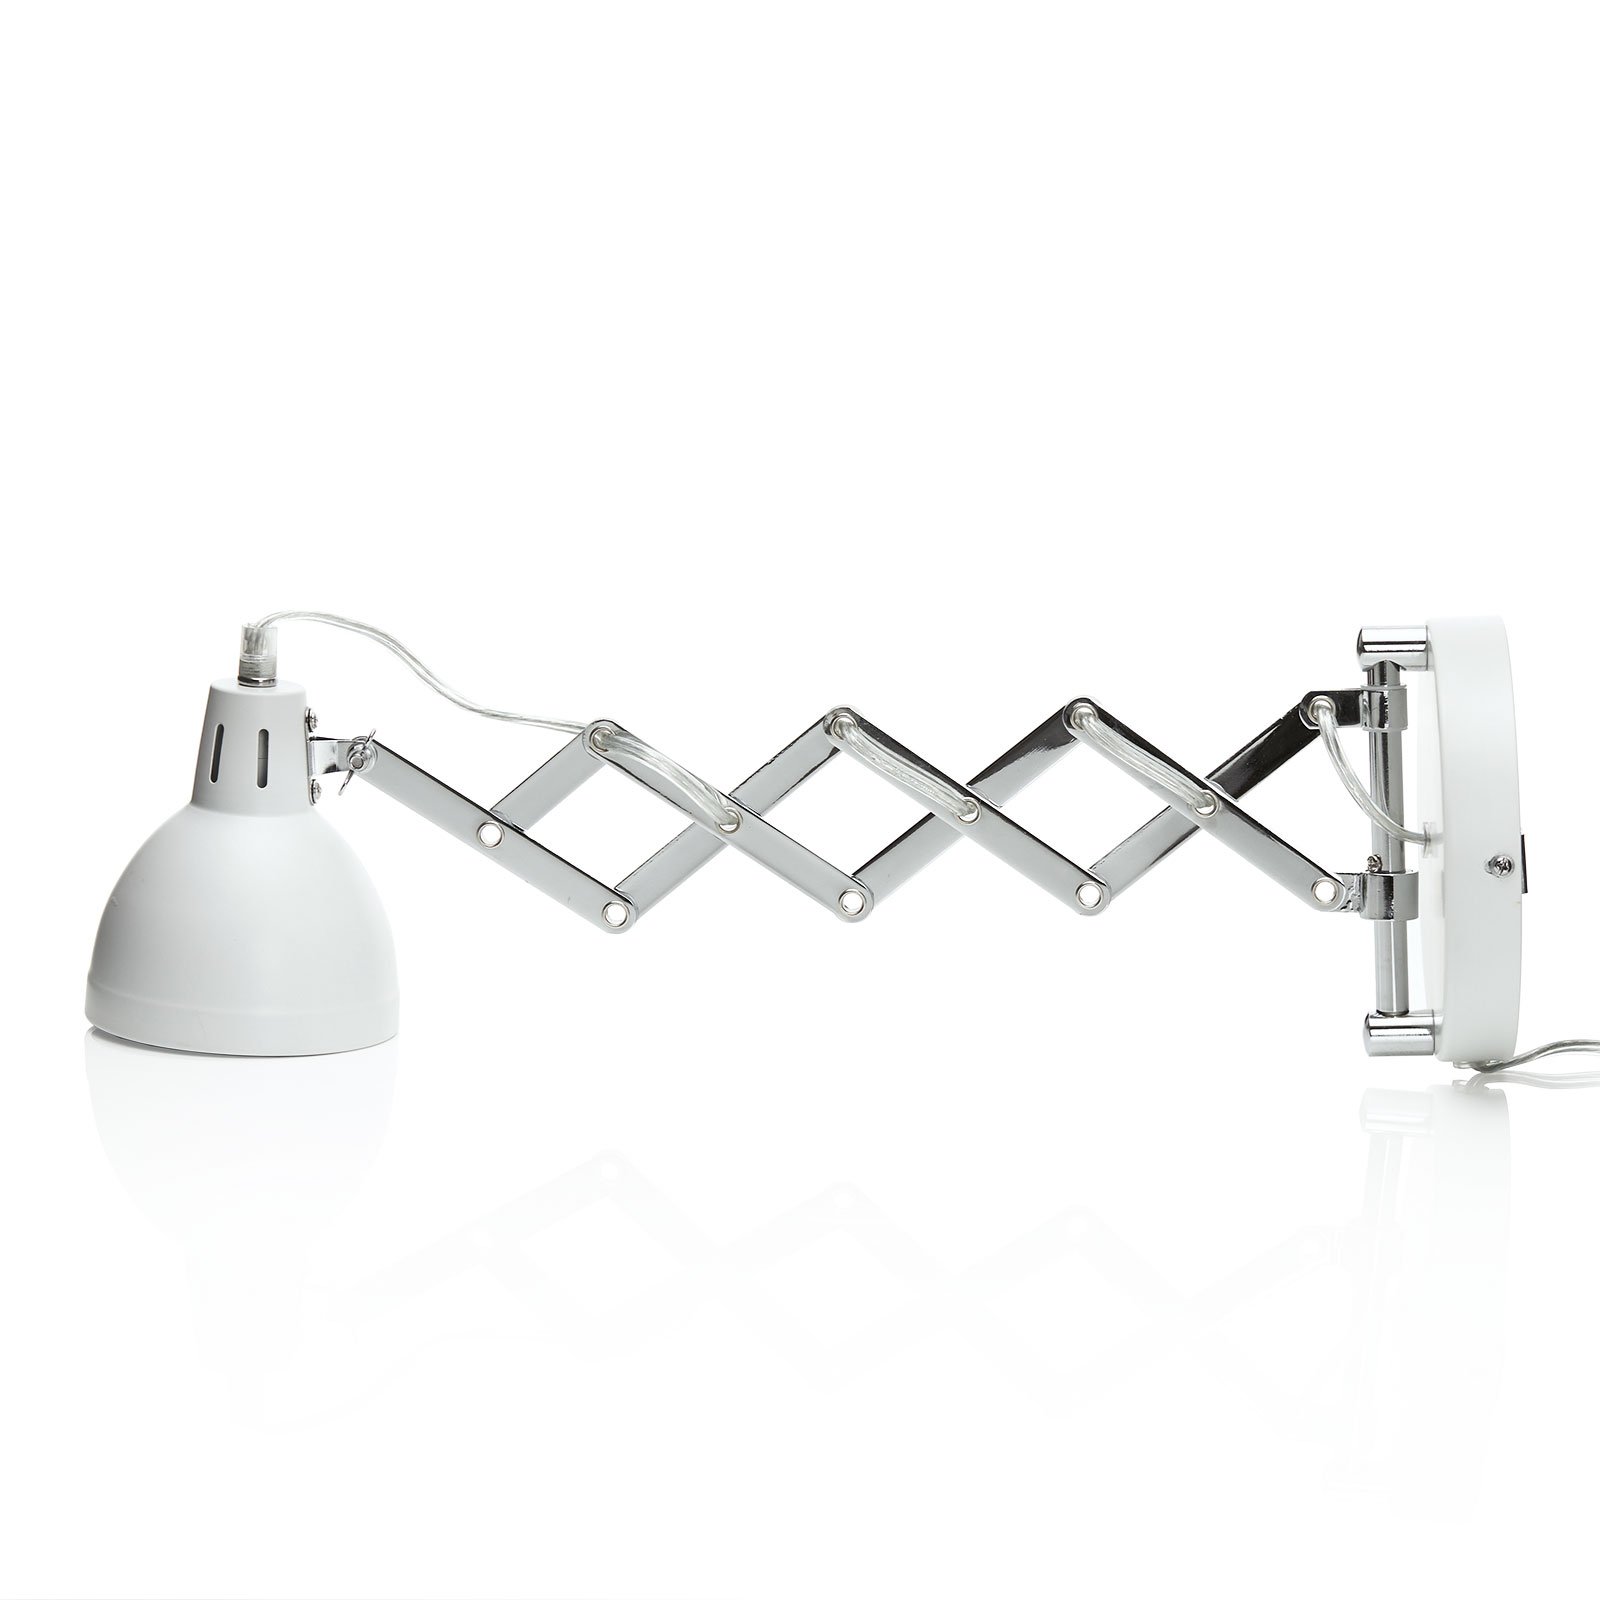 Scissor wall light, white, metal, plug, accordion